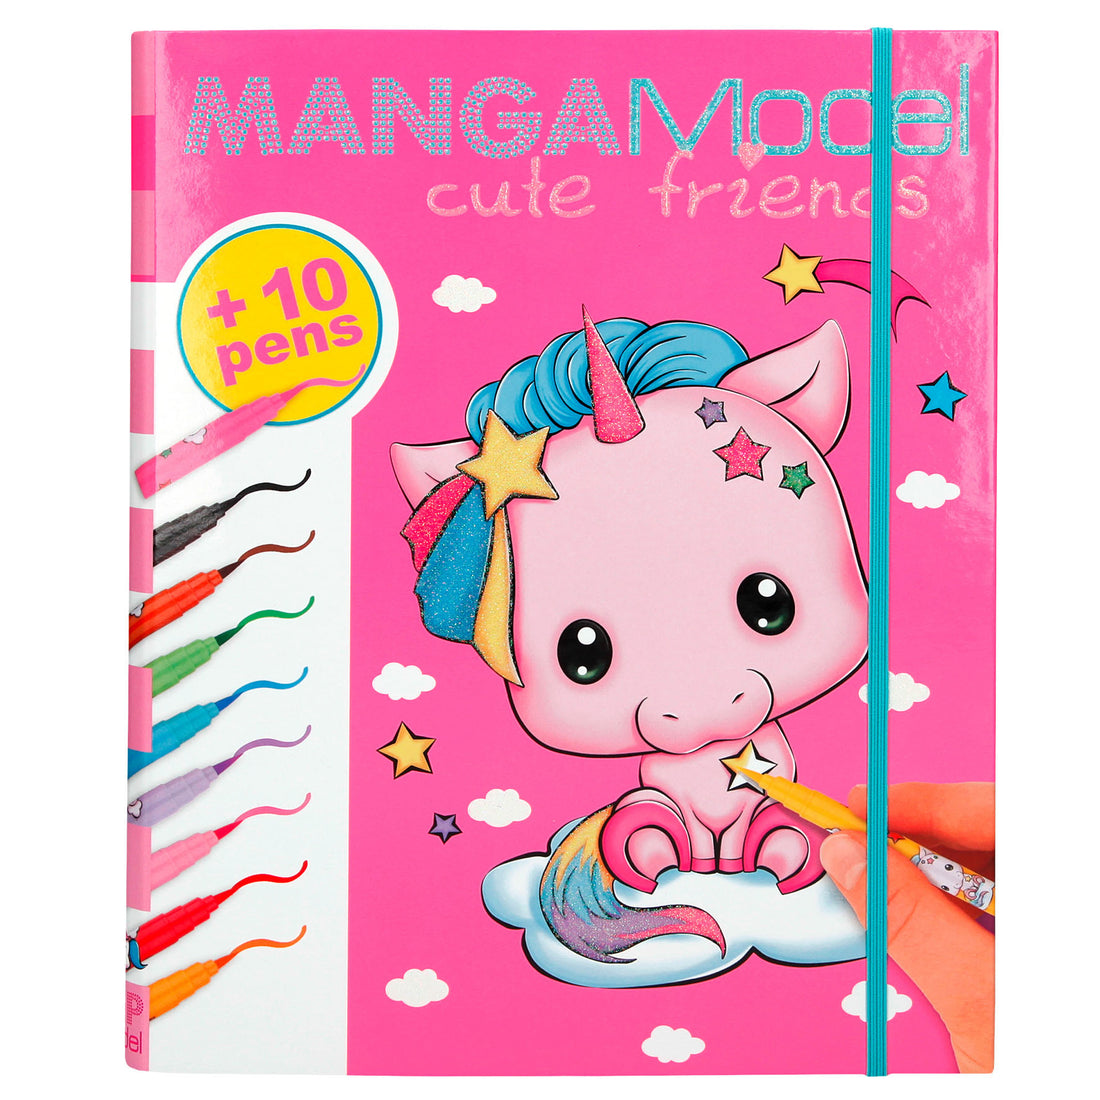 depesche-mangamodel-cute-friends-creatice-folder-with-10-feltpens- (1)